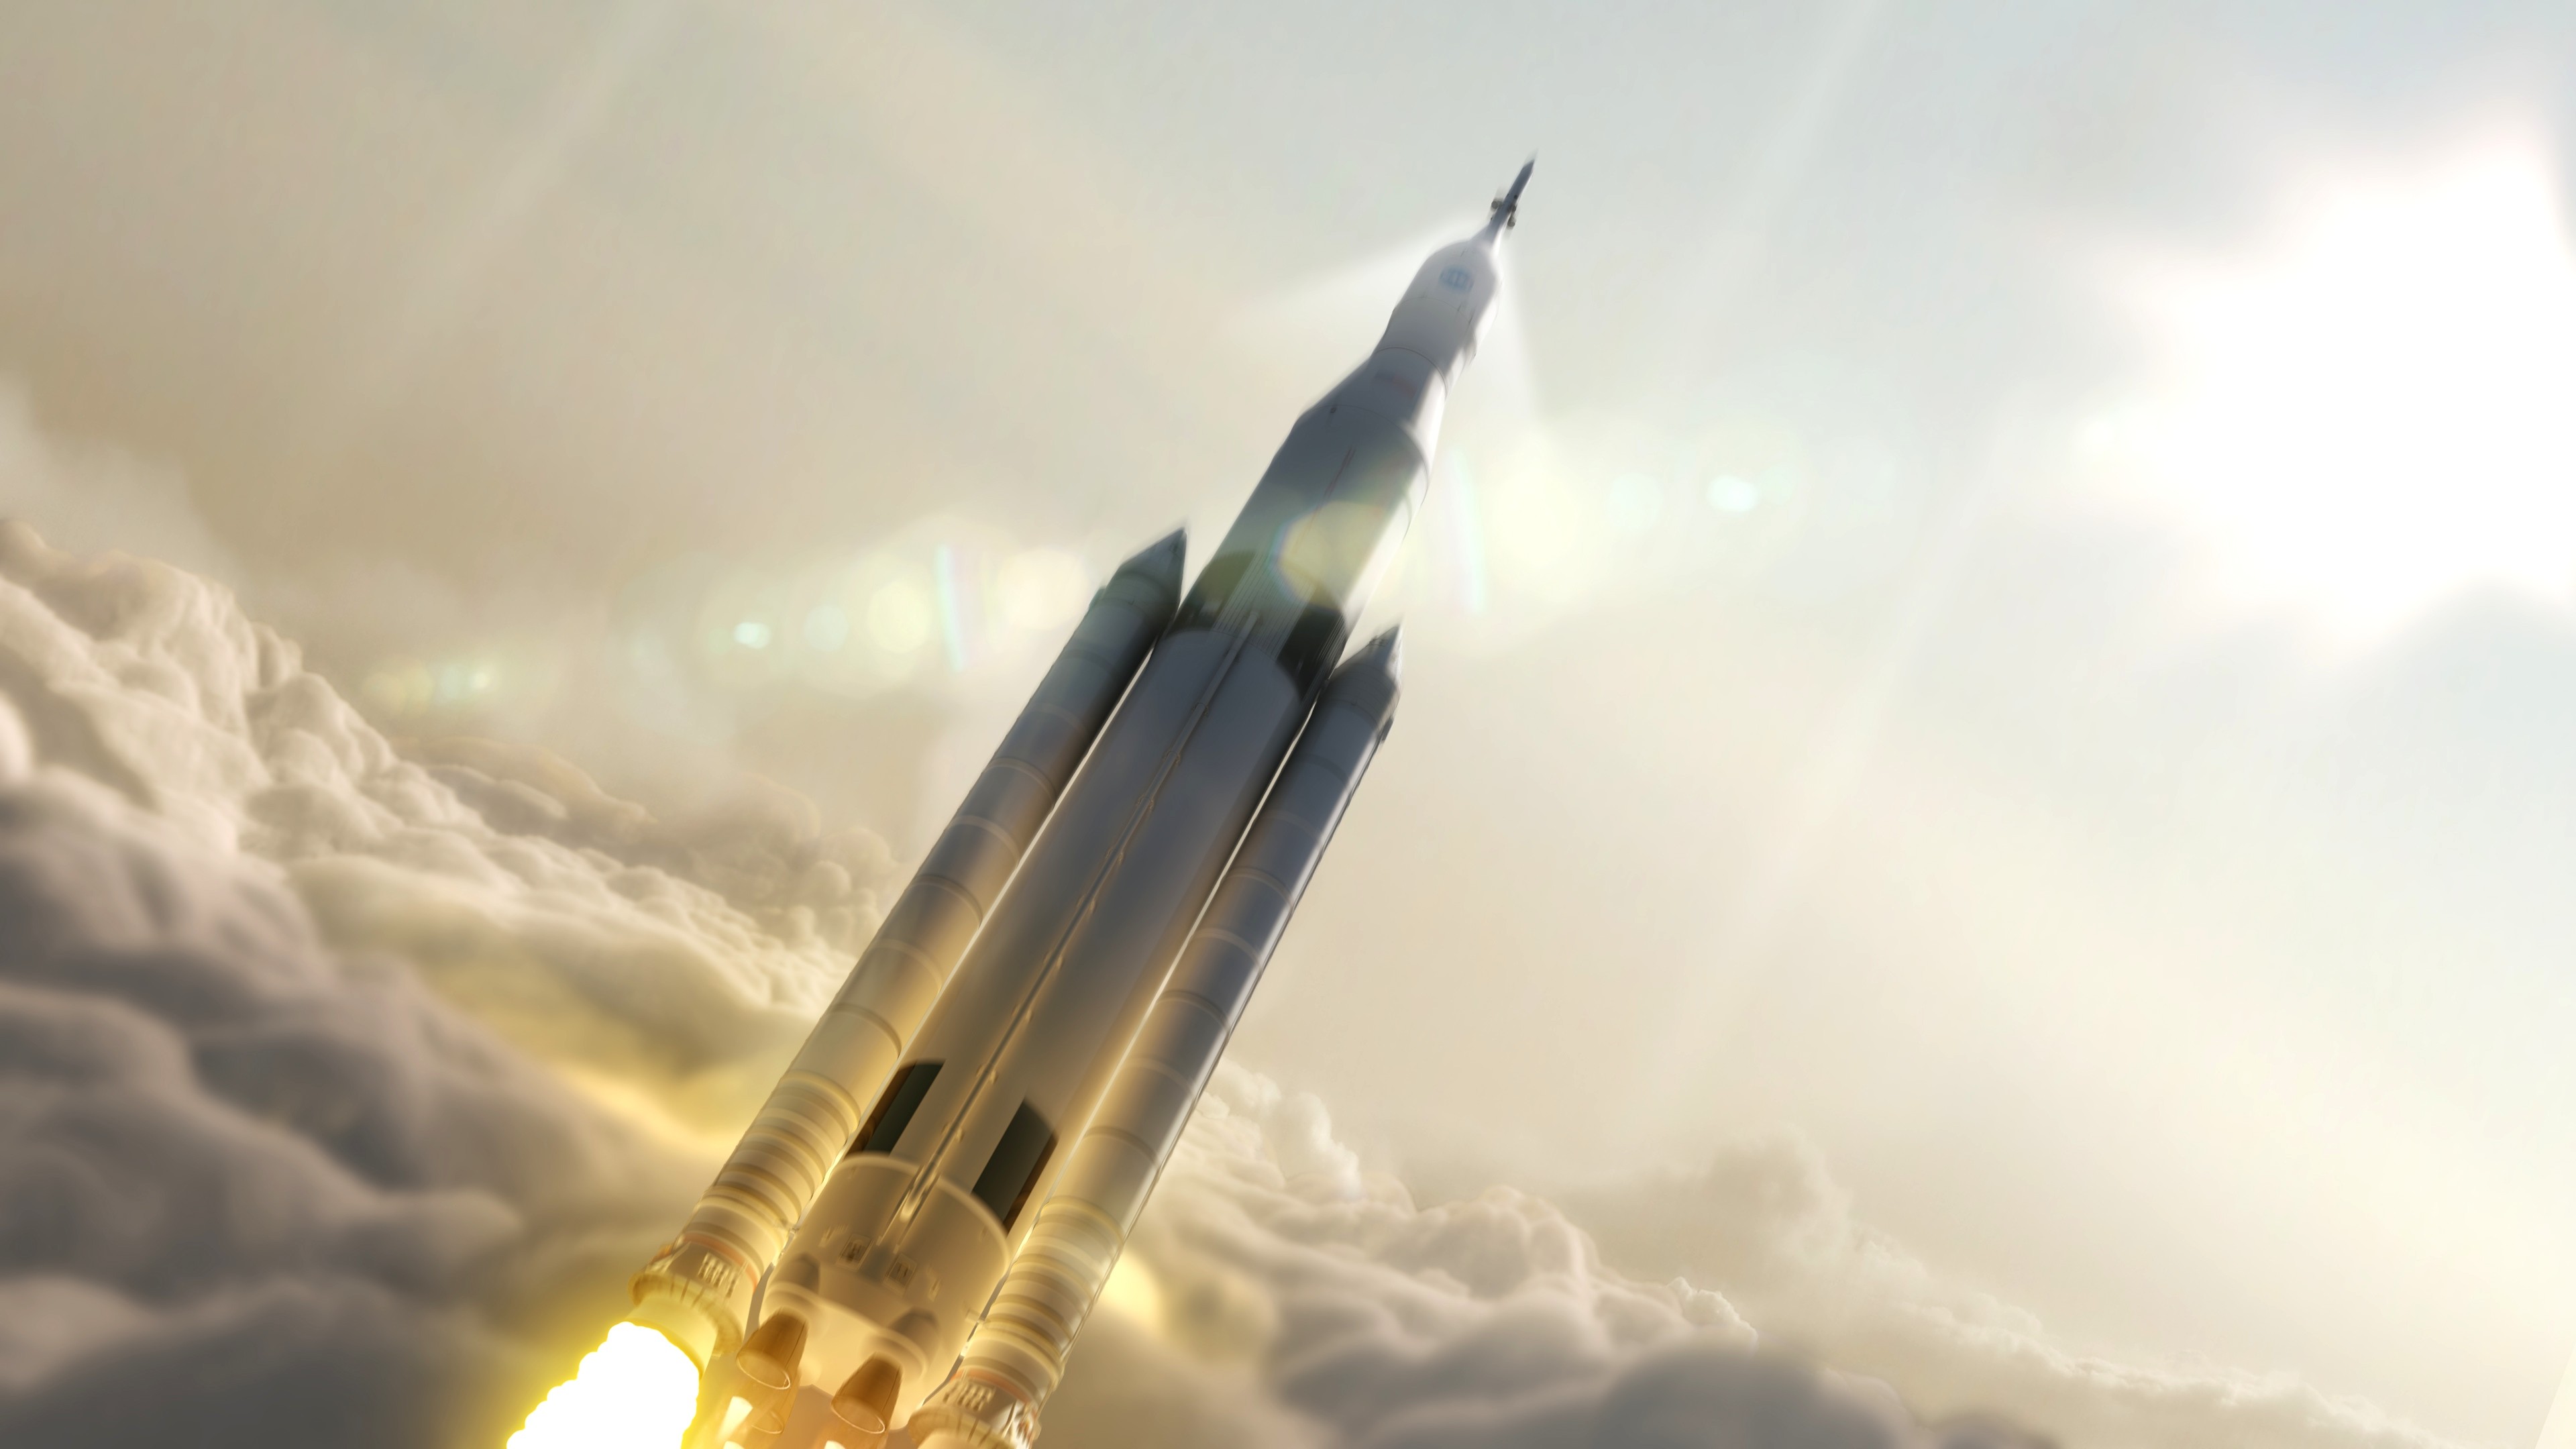 Digital Art Spaceship Rocket NASA Launch Clouds Sunlight Lens Flare Motion Blur Render 3840x2160